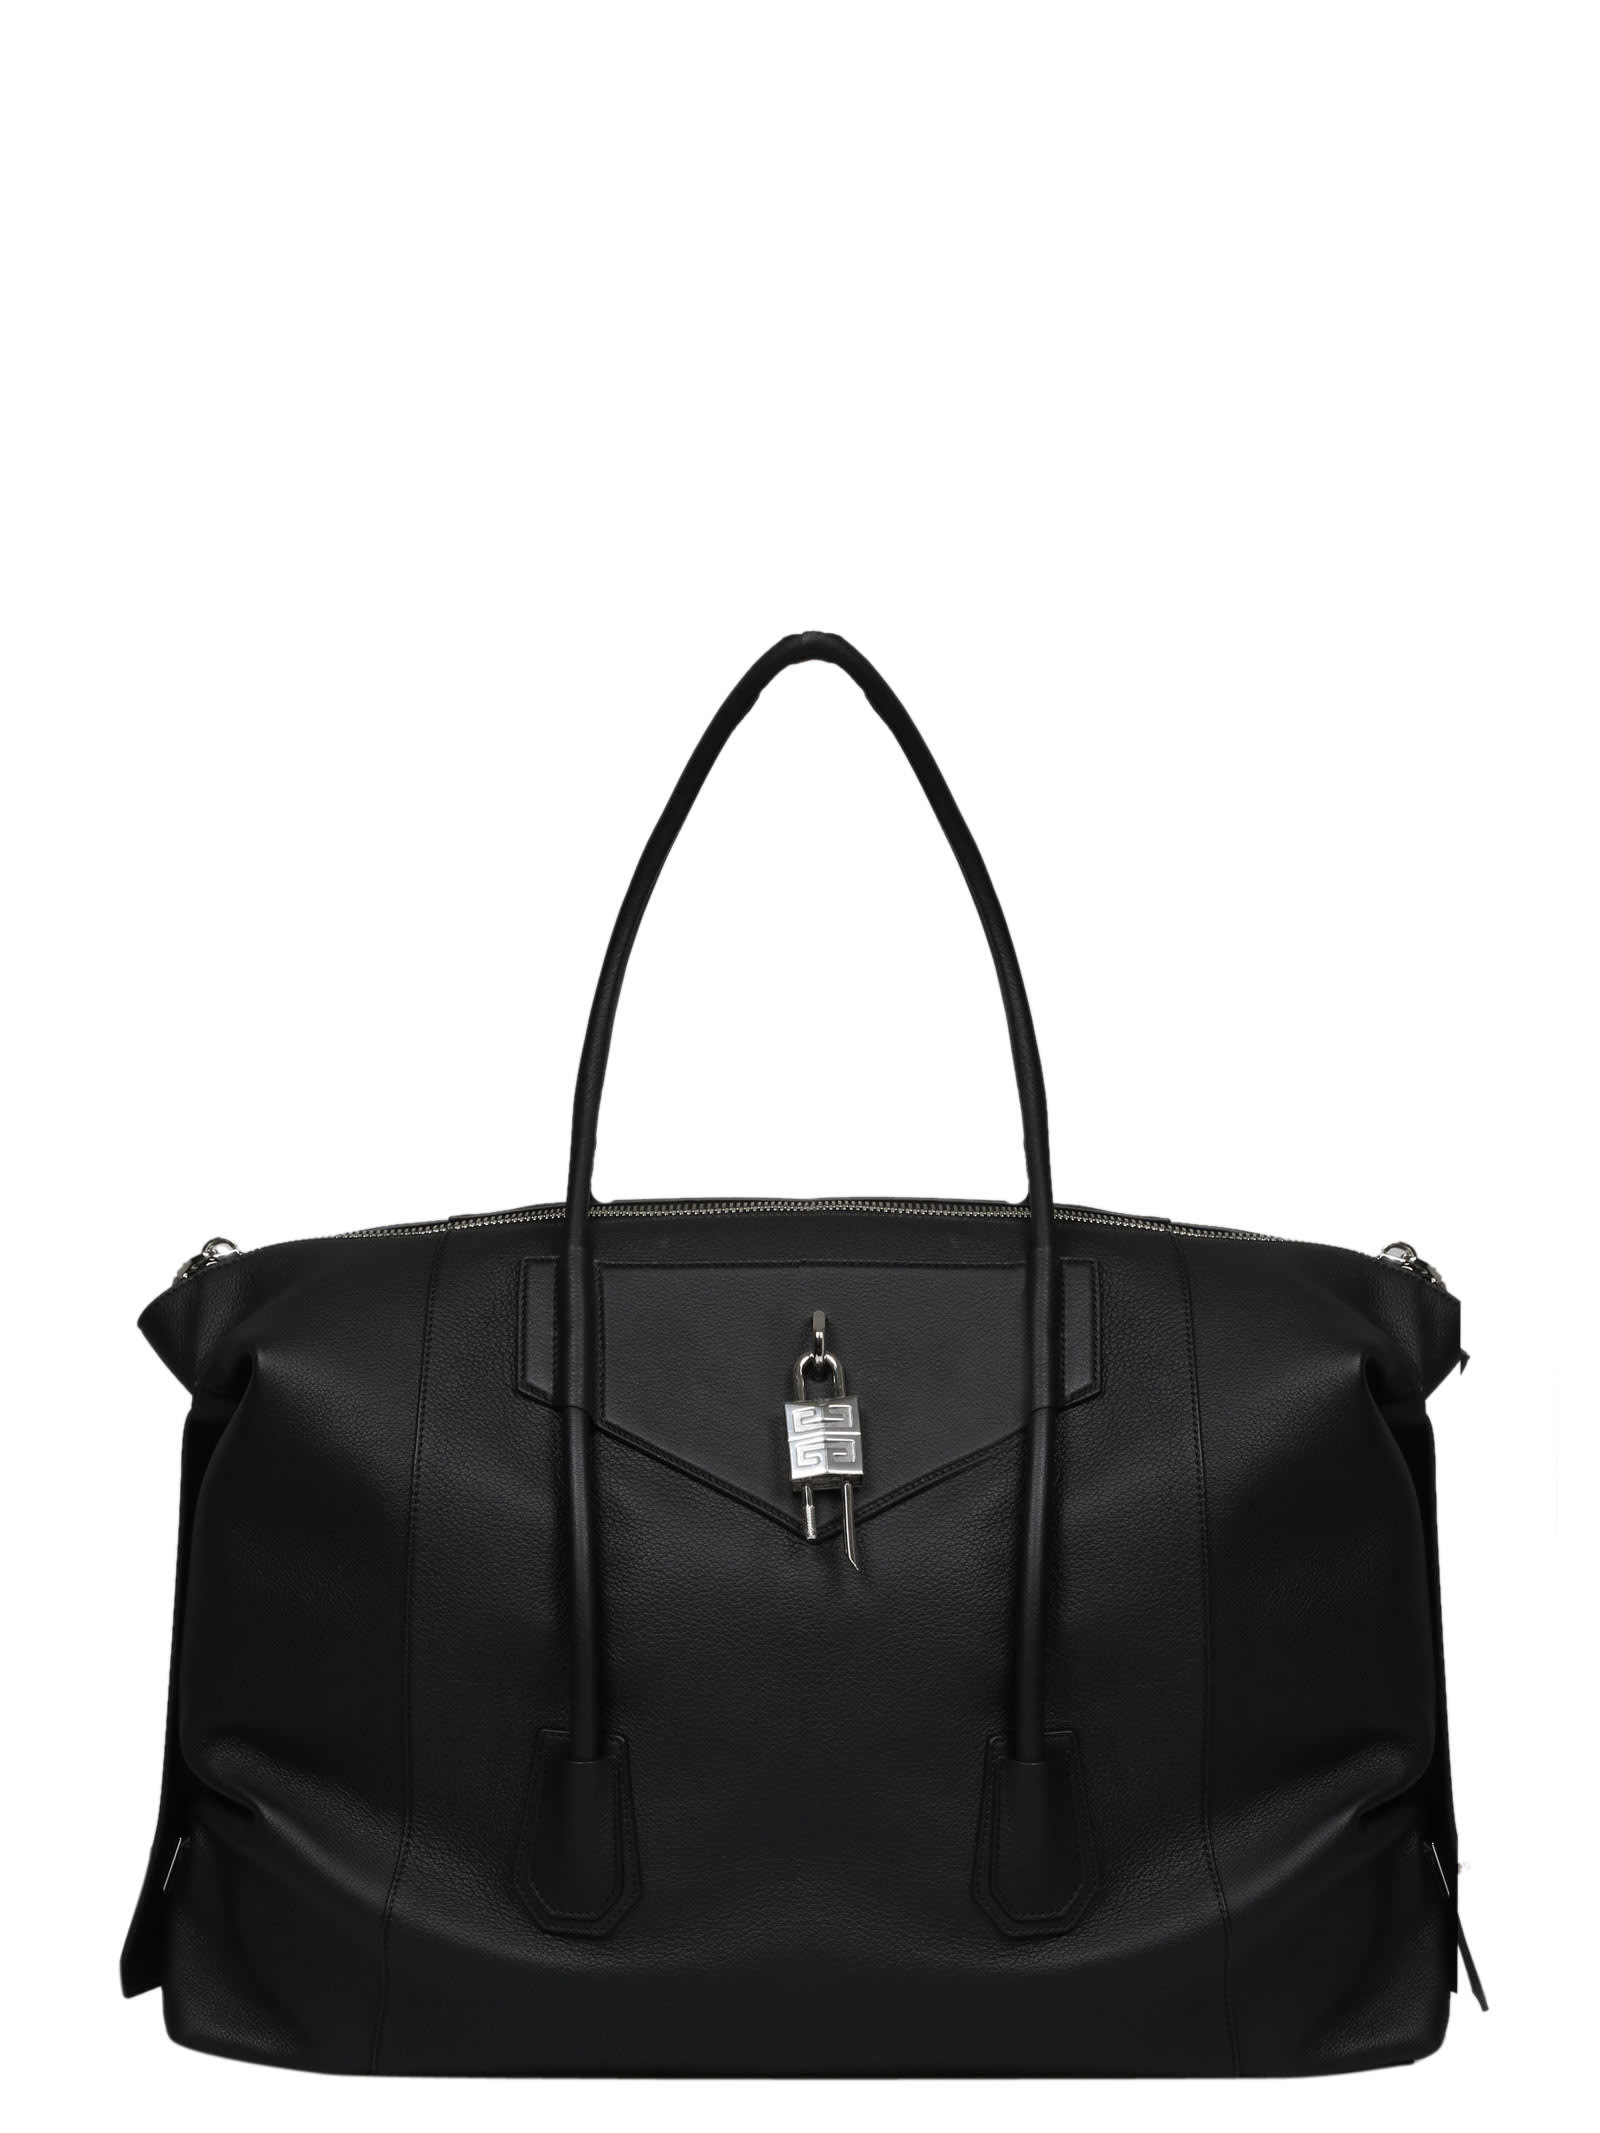 Givenchy Antigona Lock Soft Large Bag